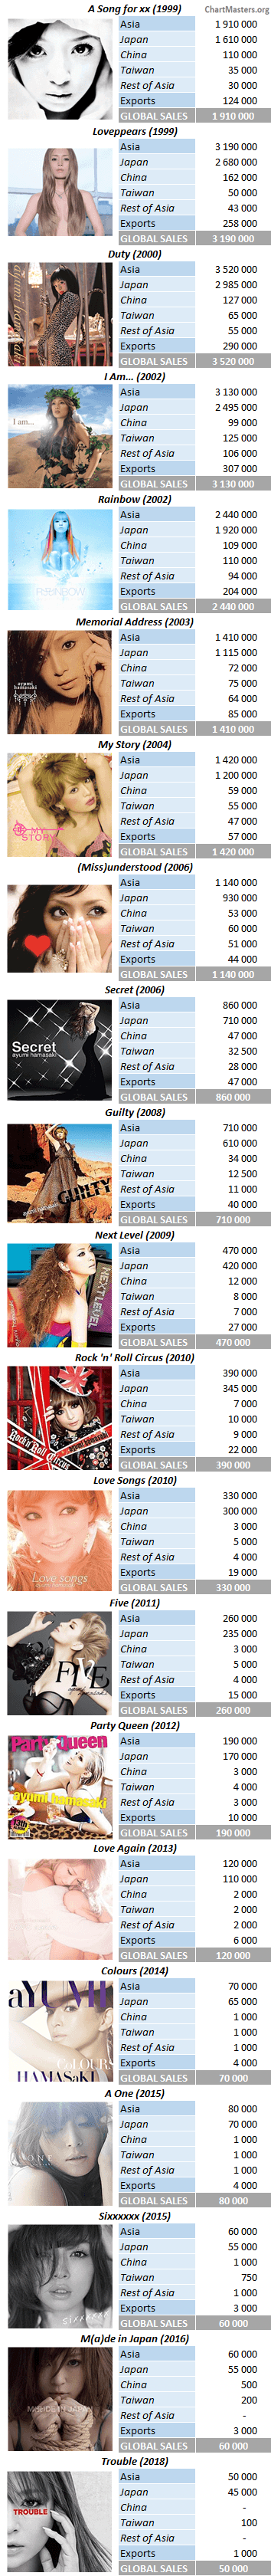 CSPC Ayumi Hamasaki album sales breakdown